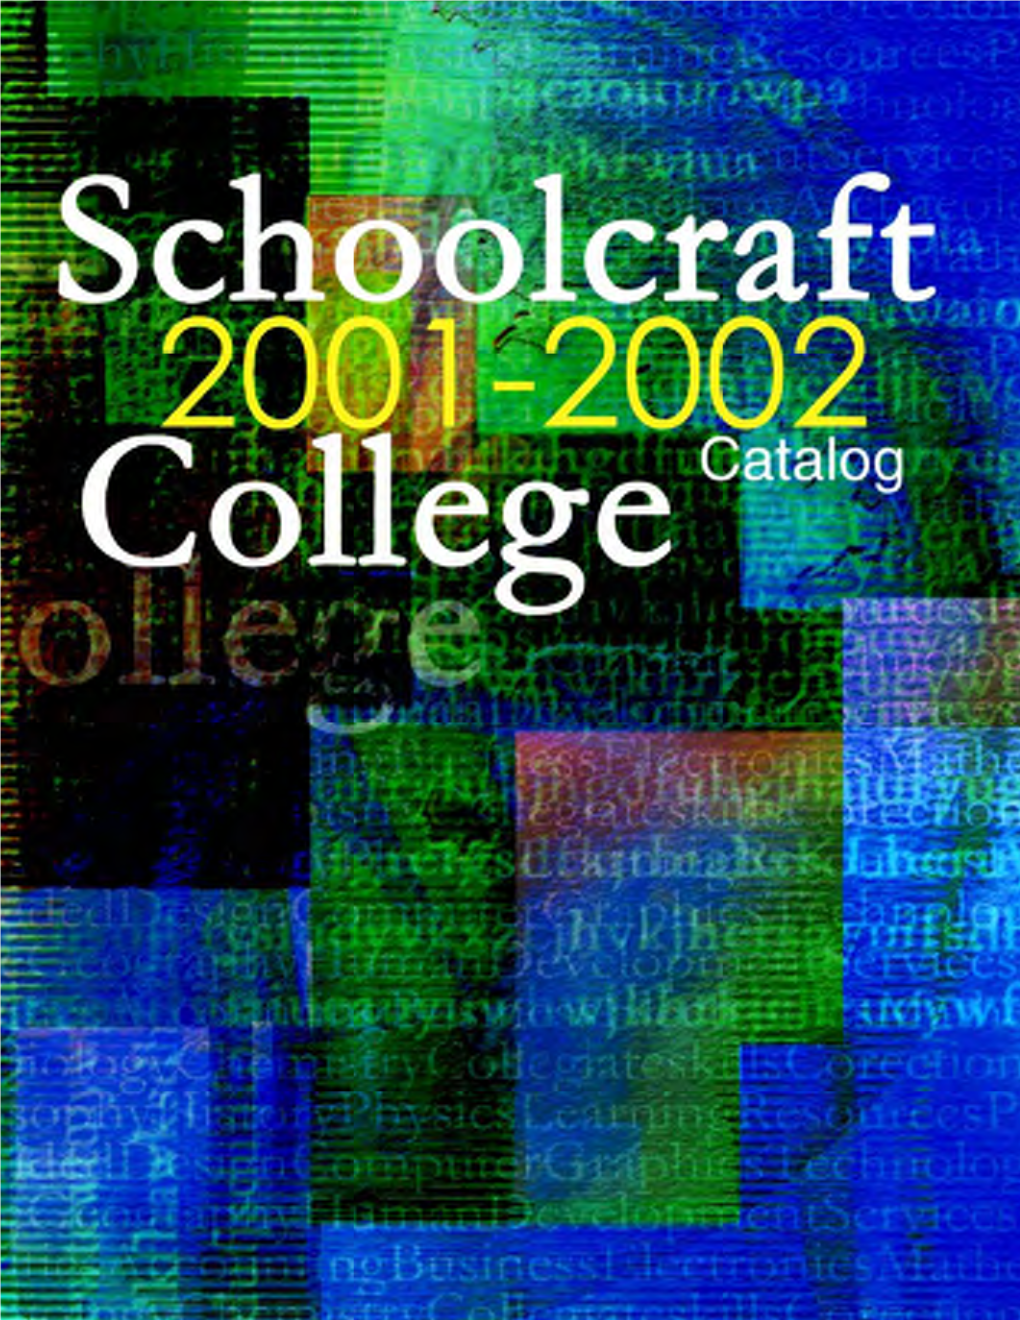 Schoolcraft College 2001-2002 Catalog